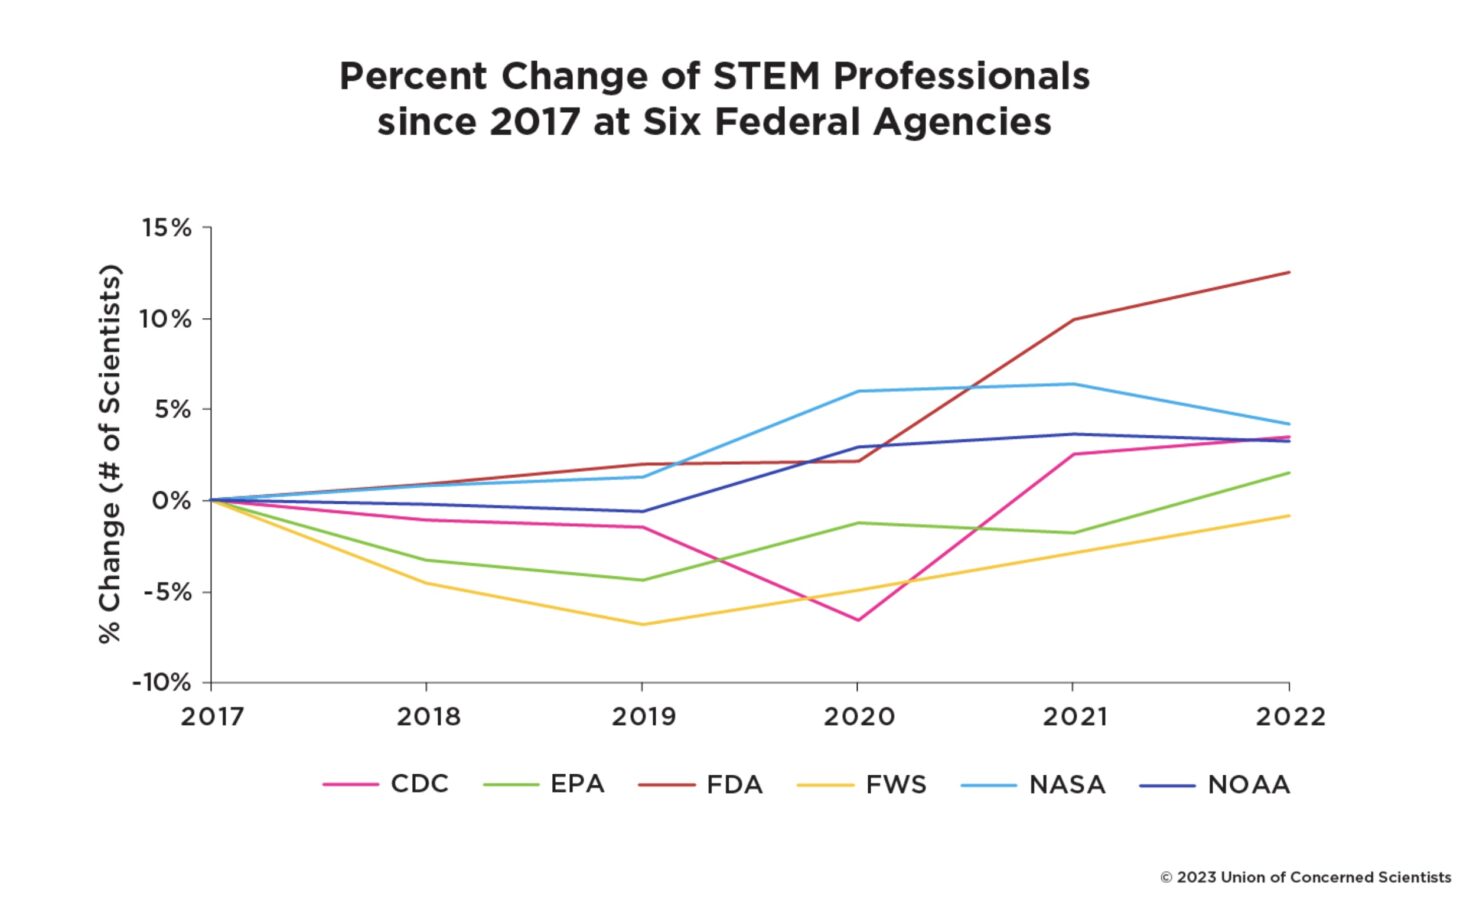 Percent Change of STEM Professionals since 2017 at Six Federal Agencies